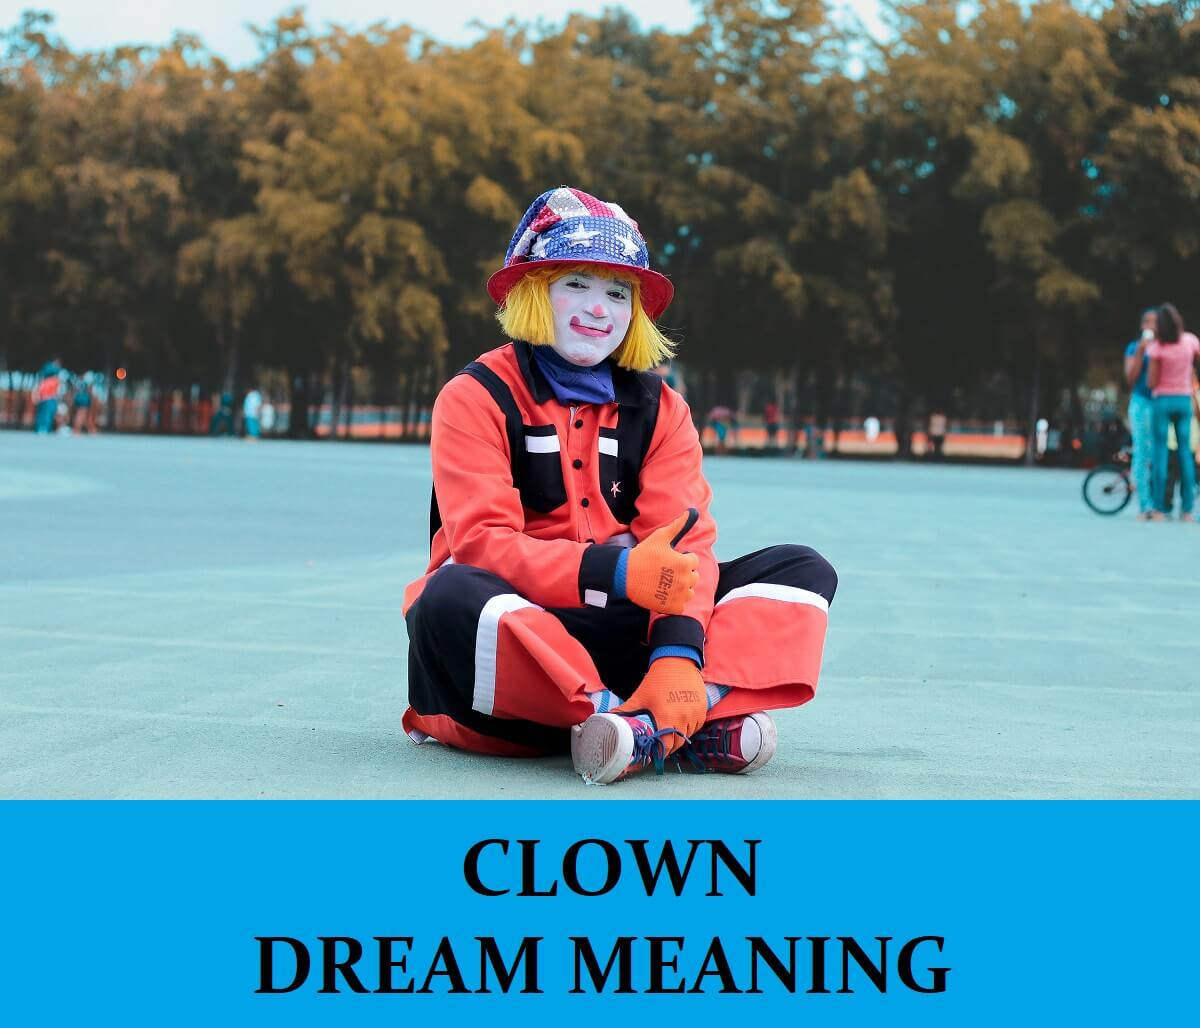 Dream About Clowns